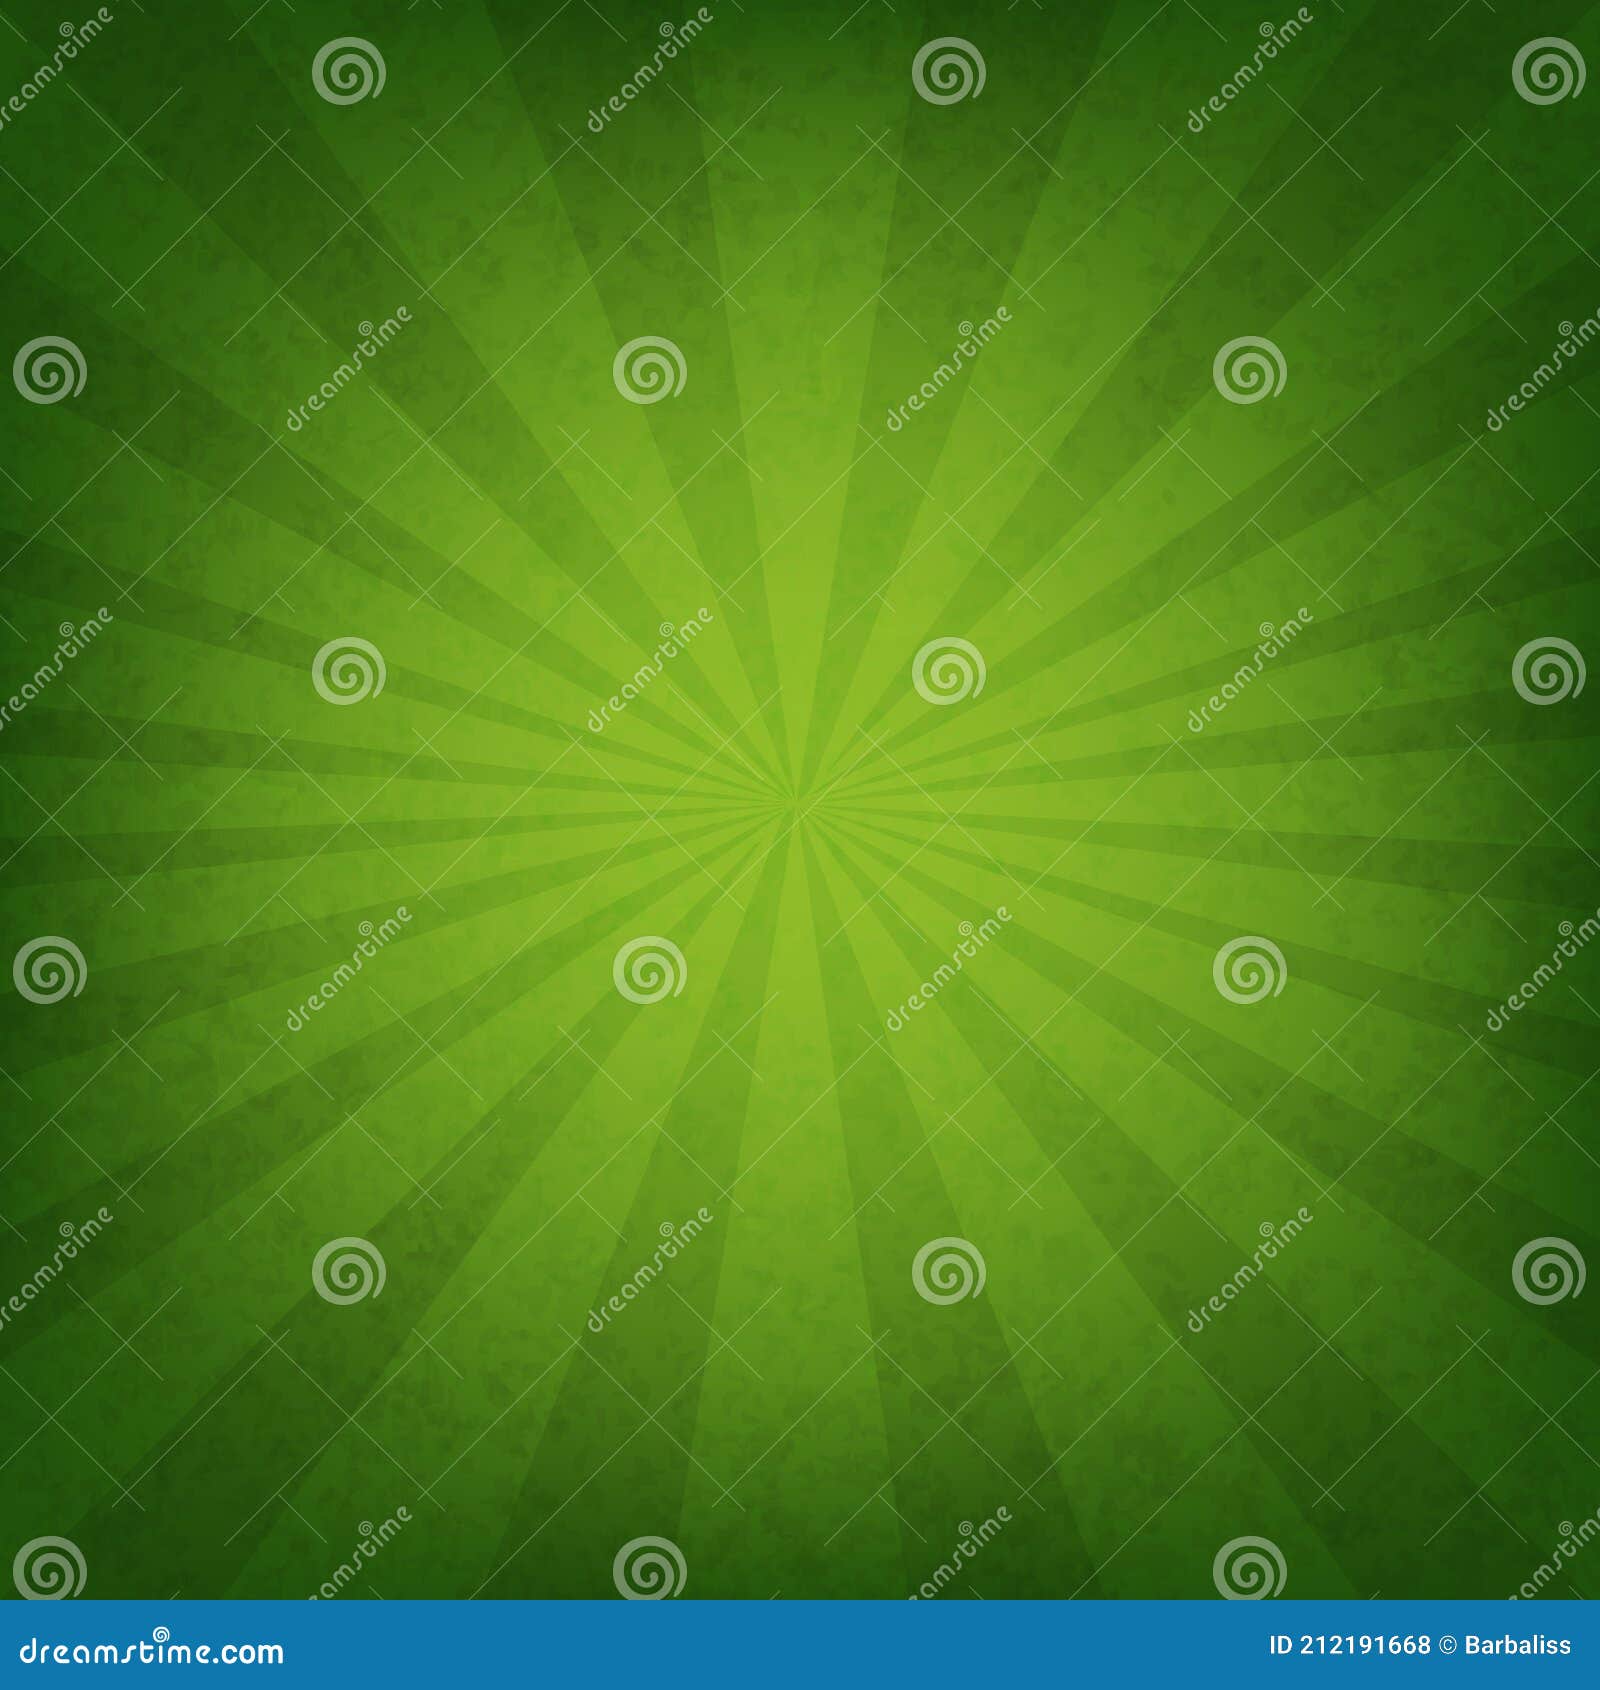 Green Sunburst Wallpaper stock vector. Illustration of blank - 212191668